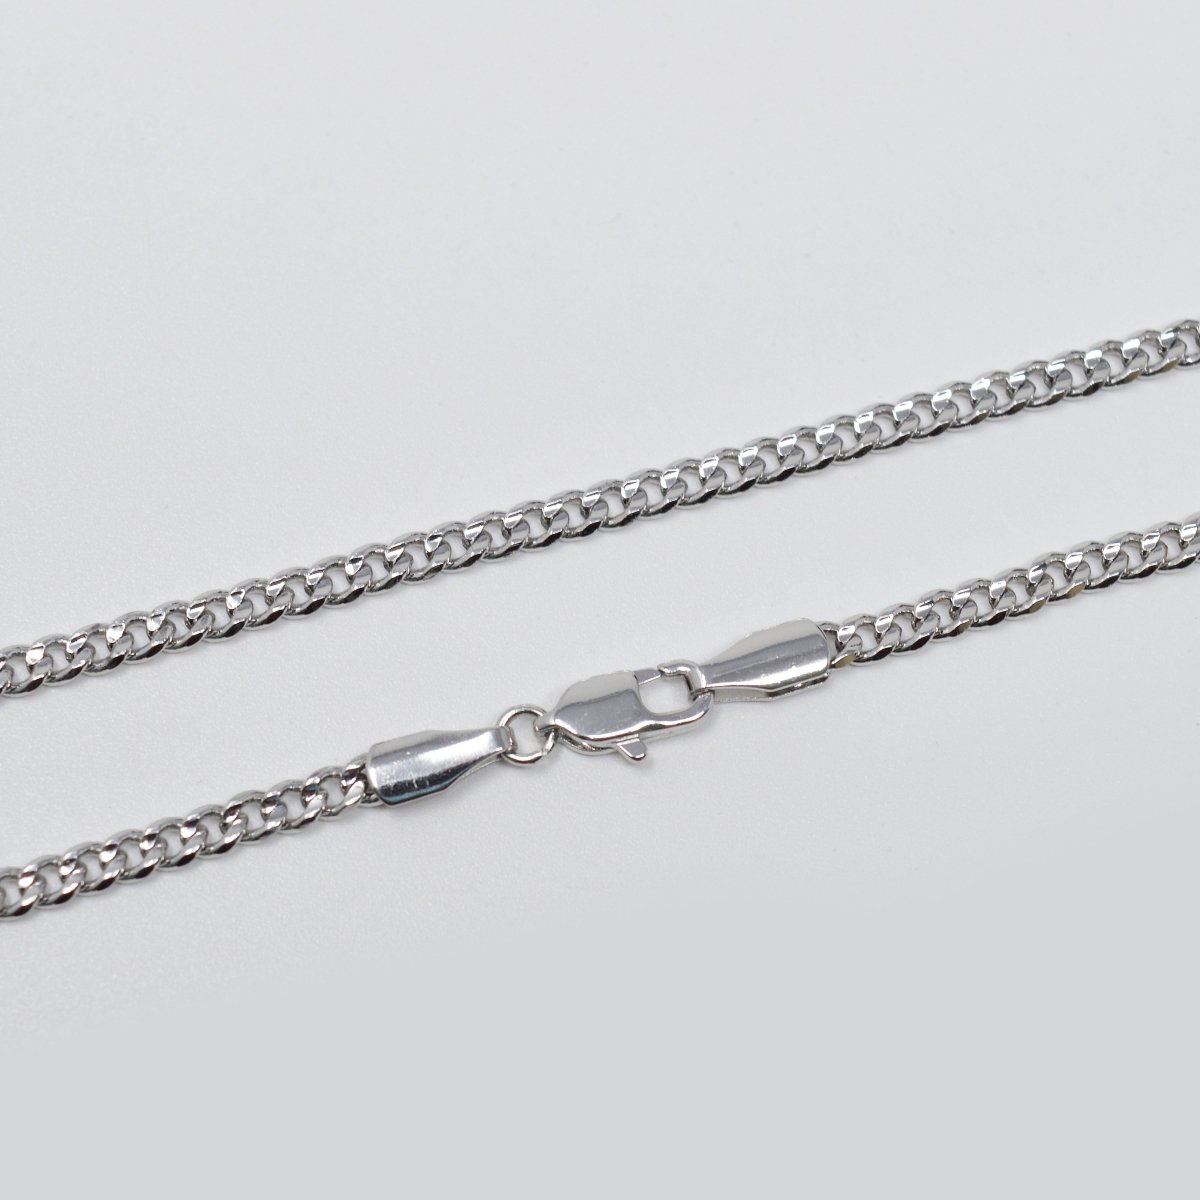 Silver Curb Chain Necklace, Medium Curb Chain Miami Cuban Link Necklace, 3mm Unisex Curb Chain for Necklace Unisex Chain Jewelry | CN-1014, CN-1016 Clearance Pricing - DLUXCA